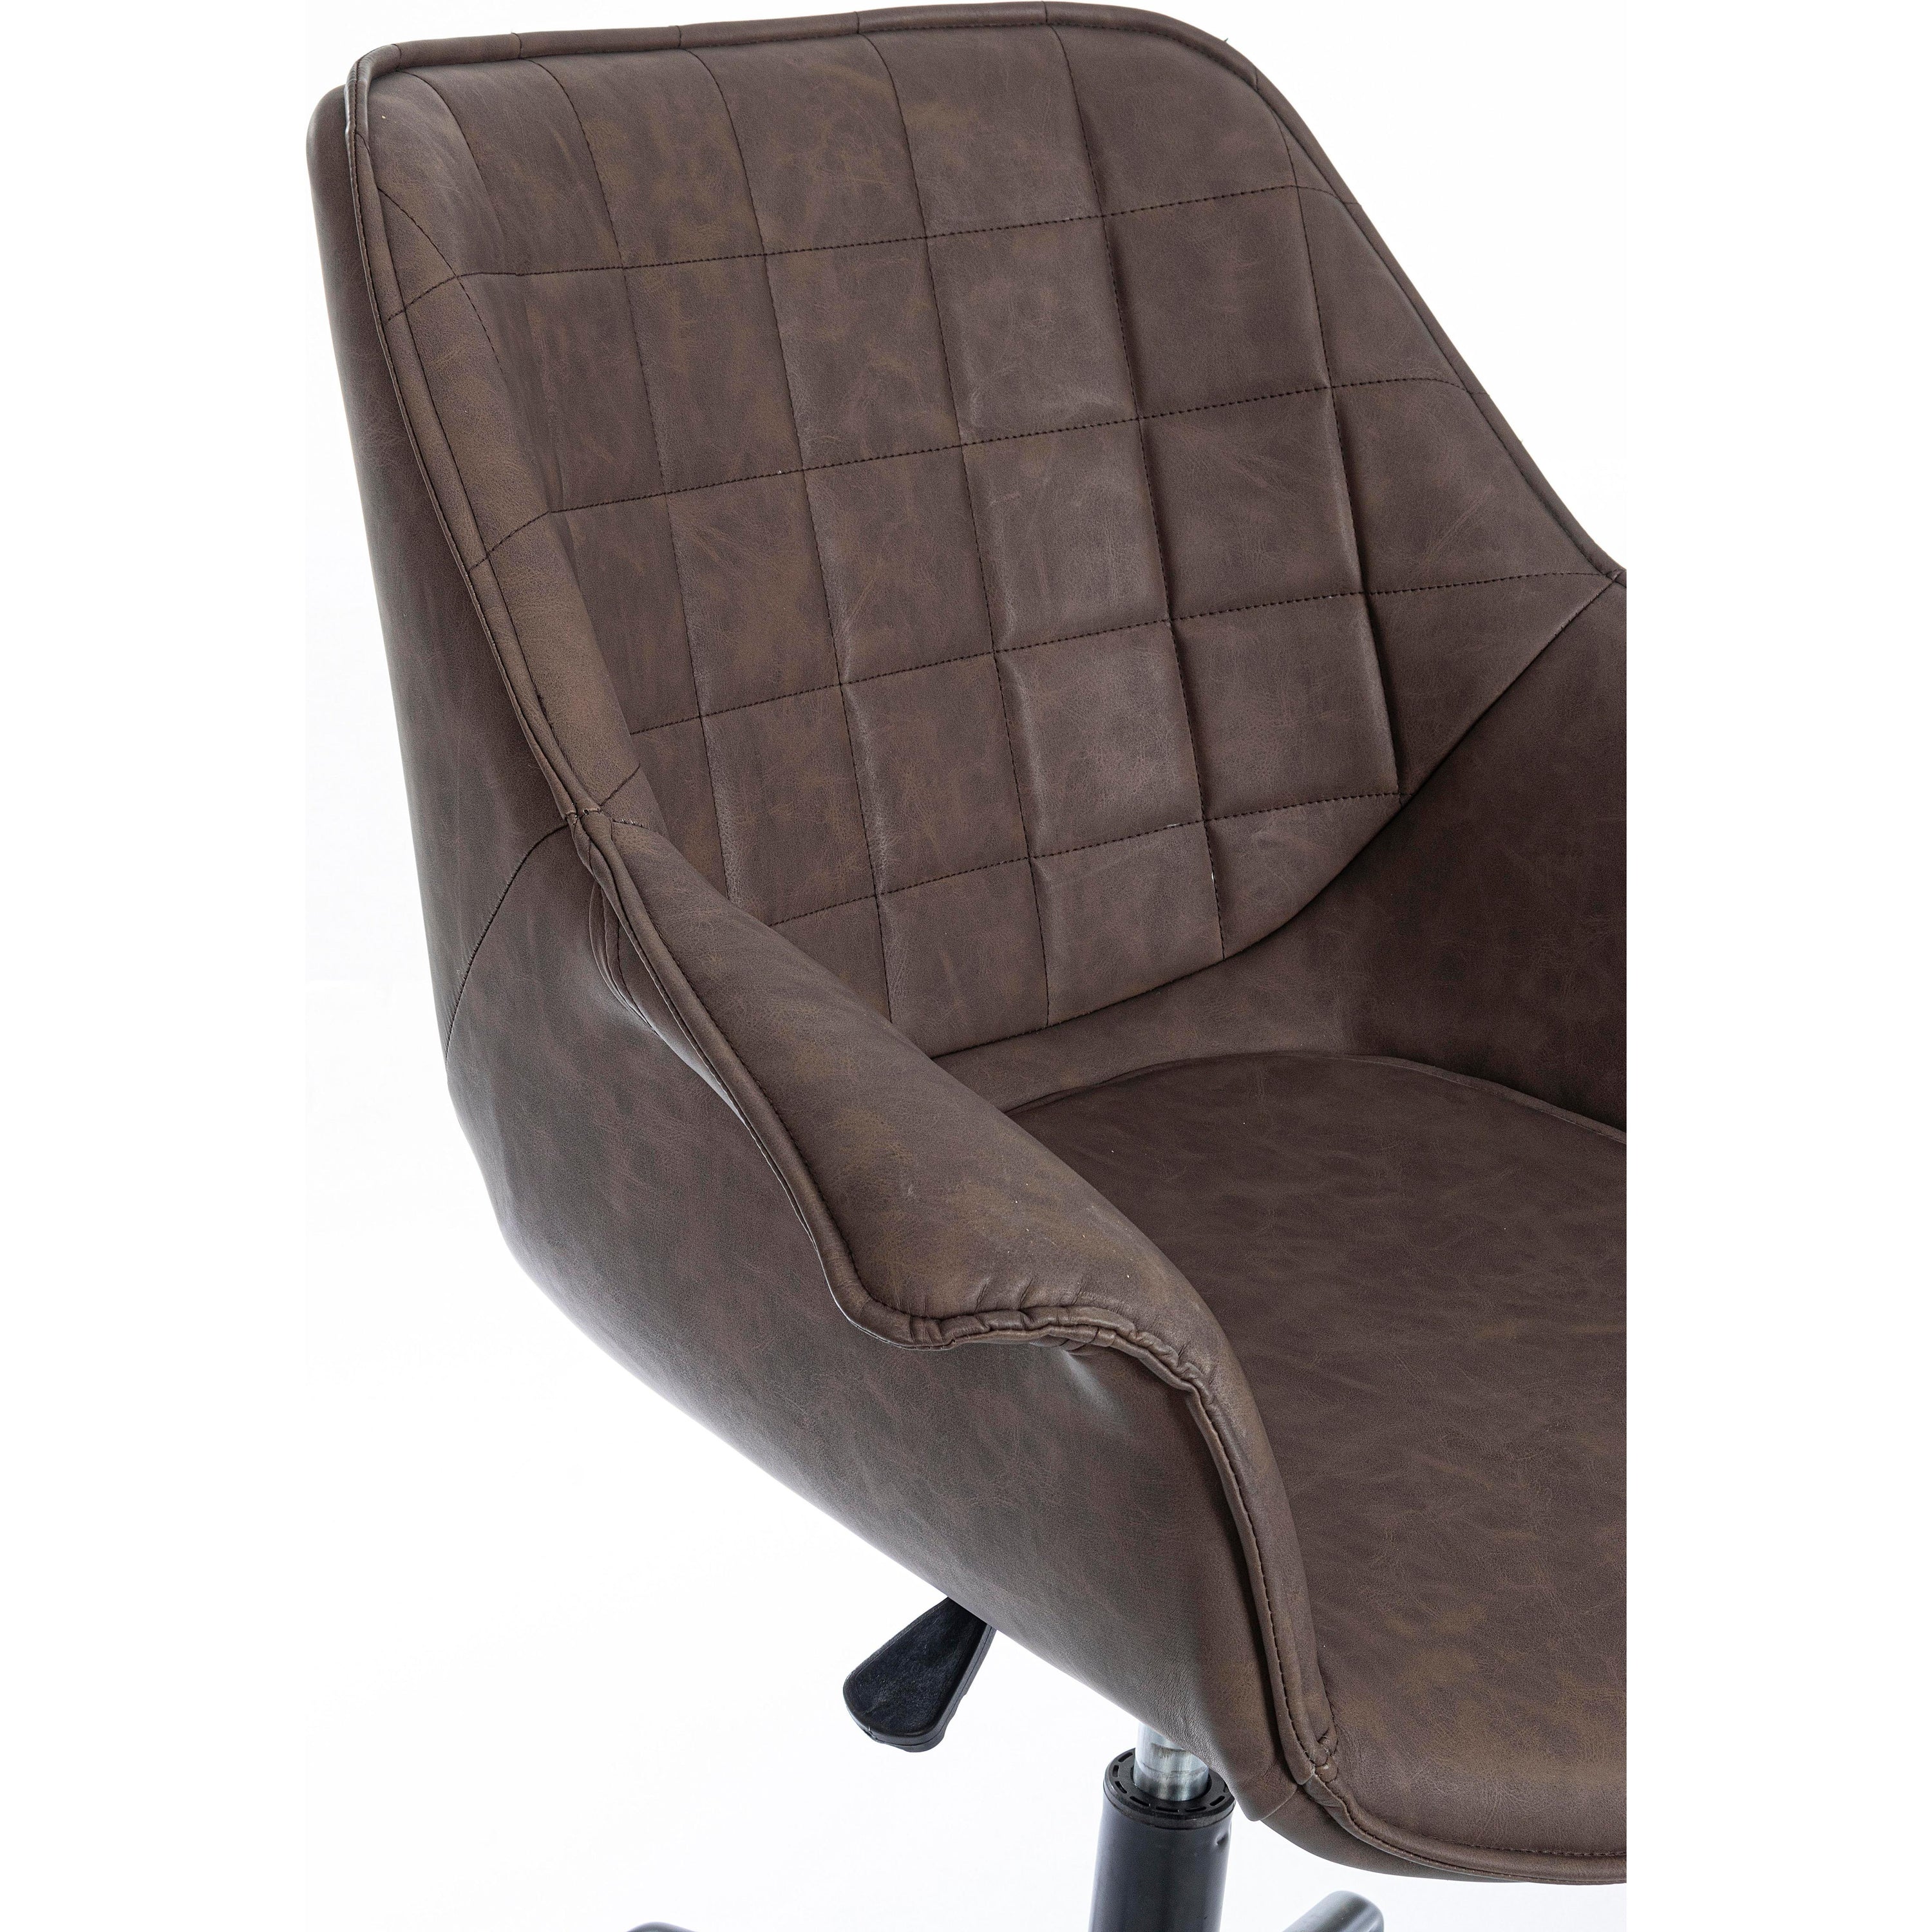 JOSHUA biuro kėdė su ratukais, ruda spalva